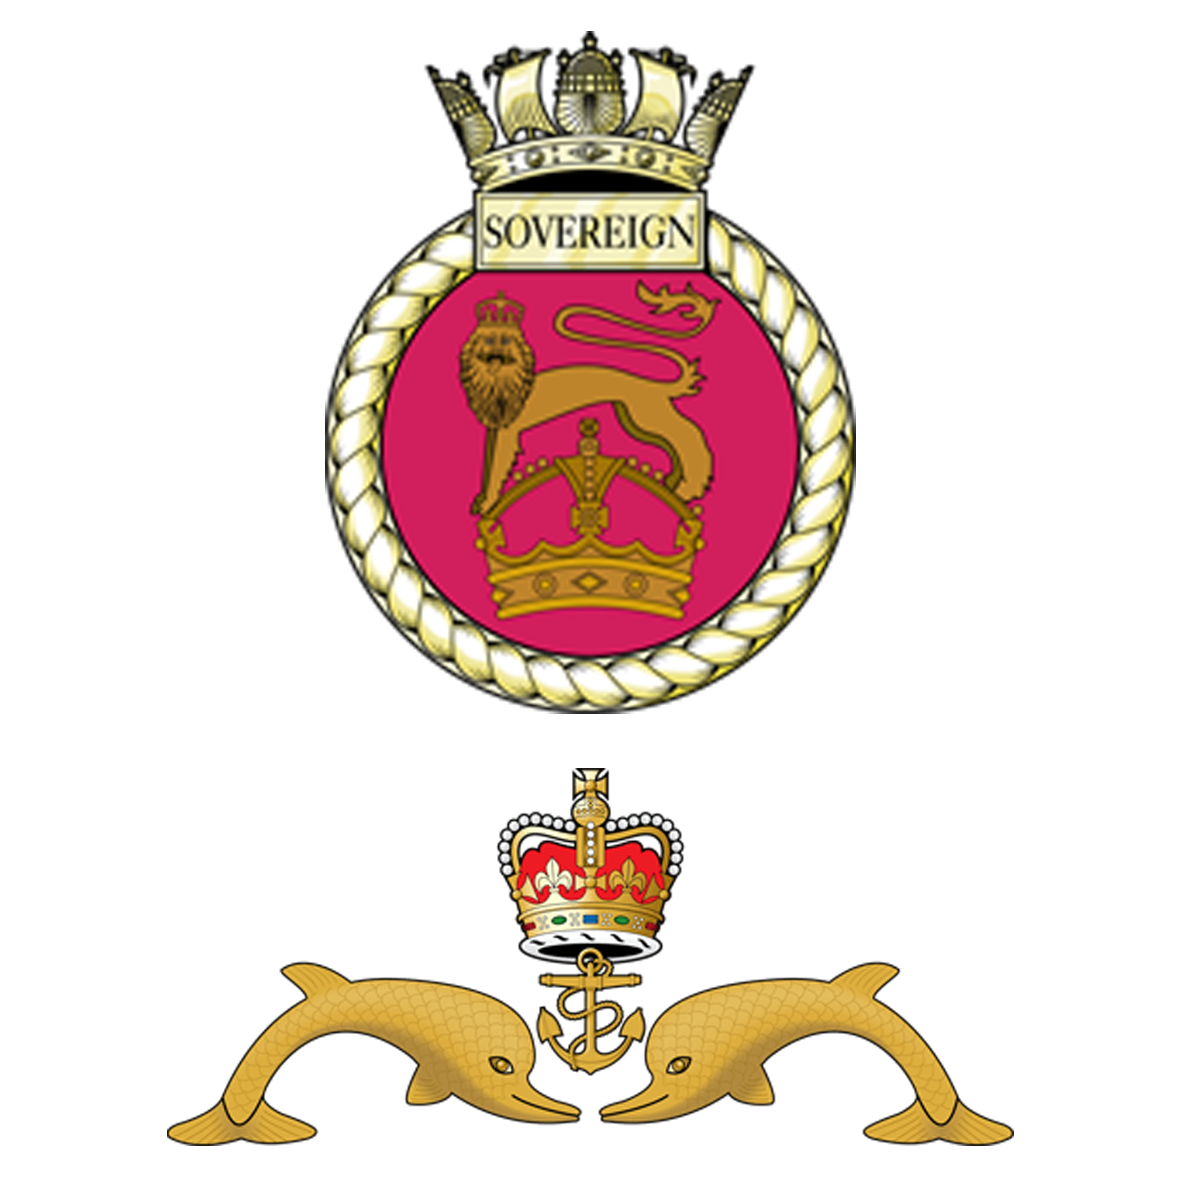 HMS Sovereign